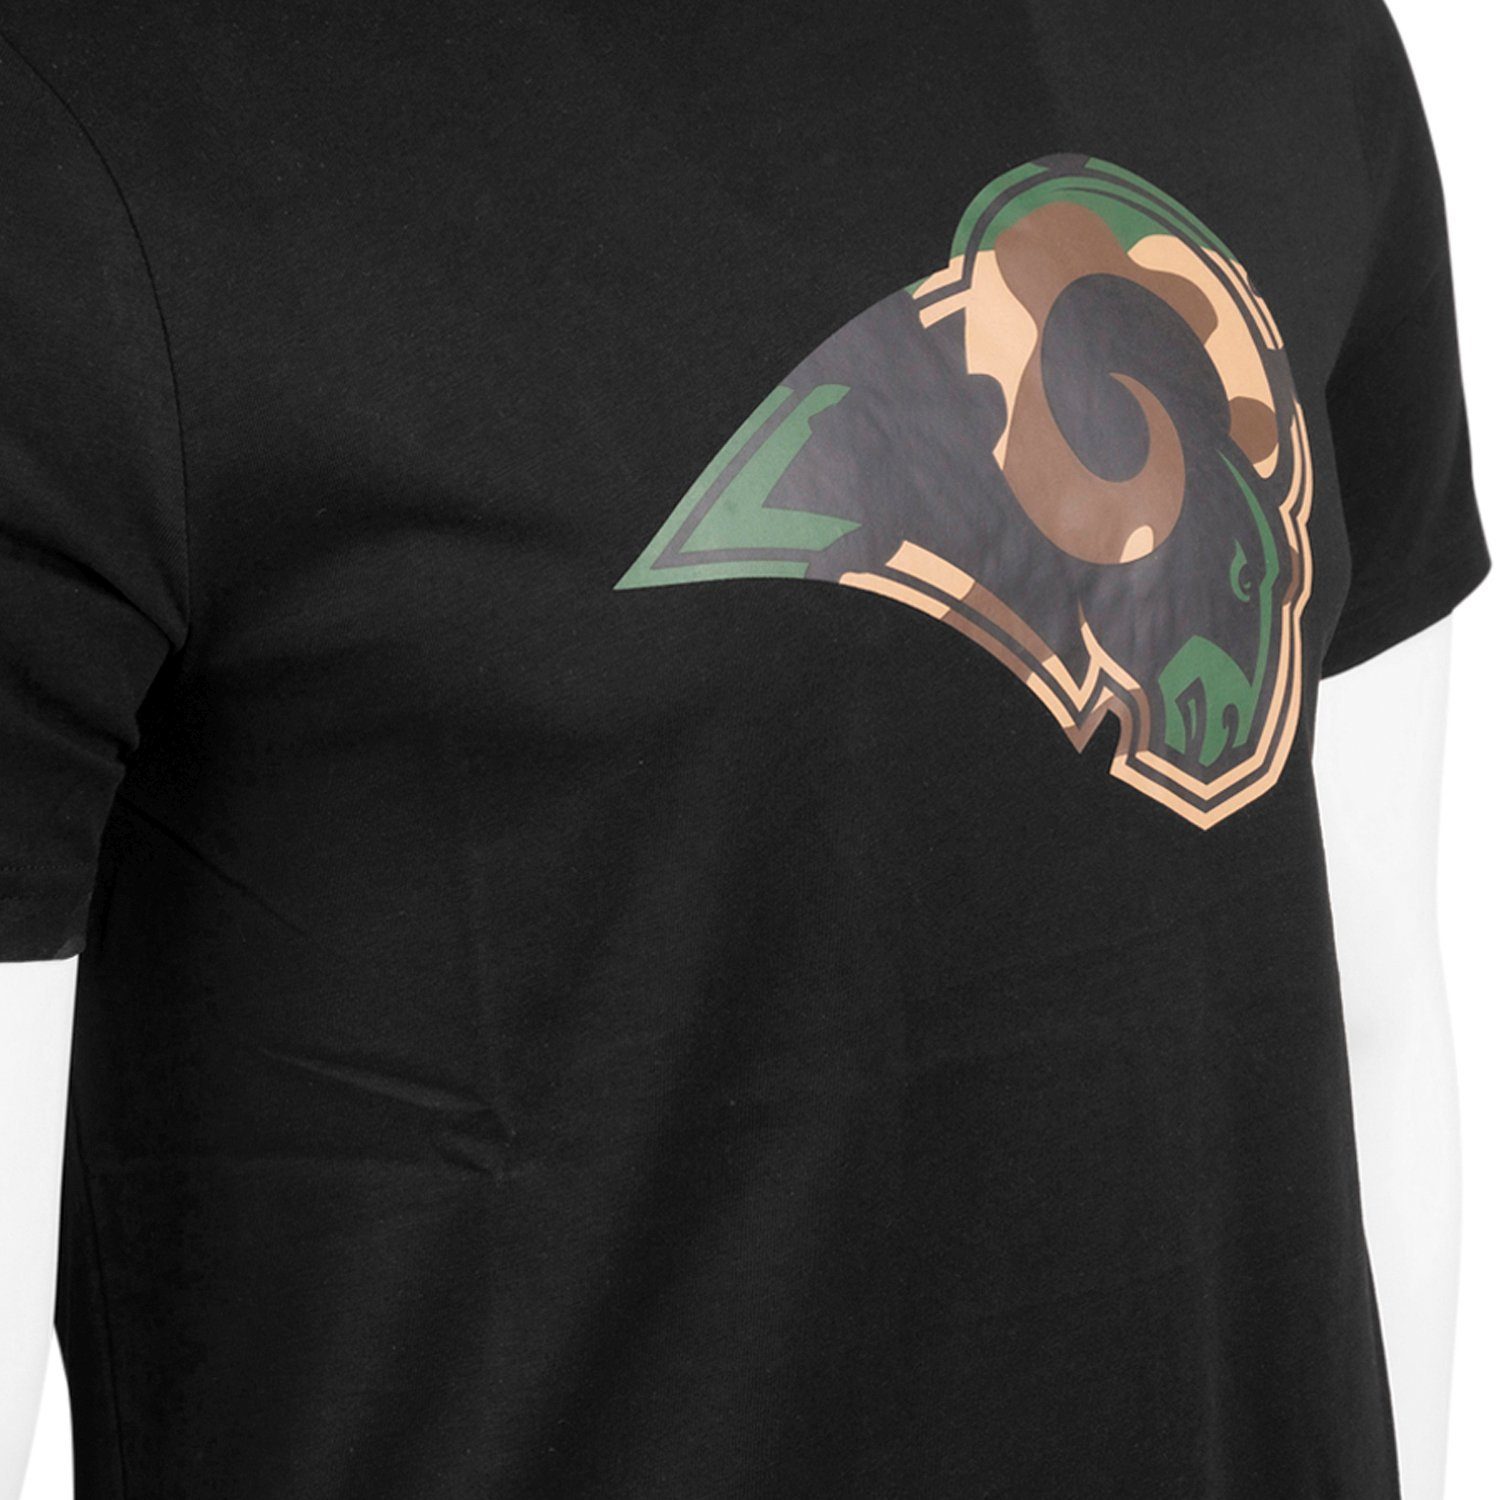 Era Los Print-Shirt New Teams Football Angeles NFL Rams